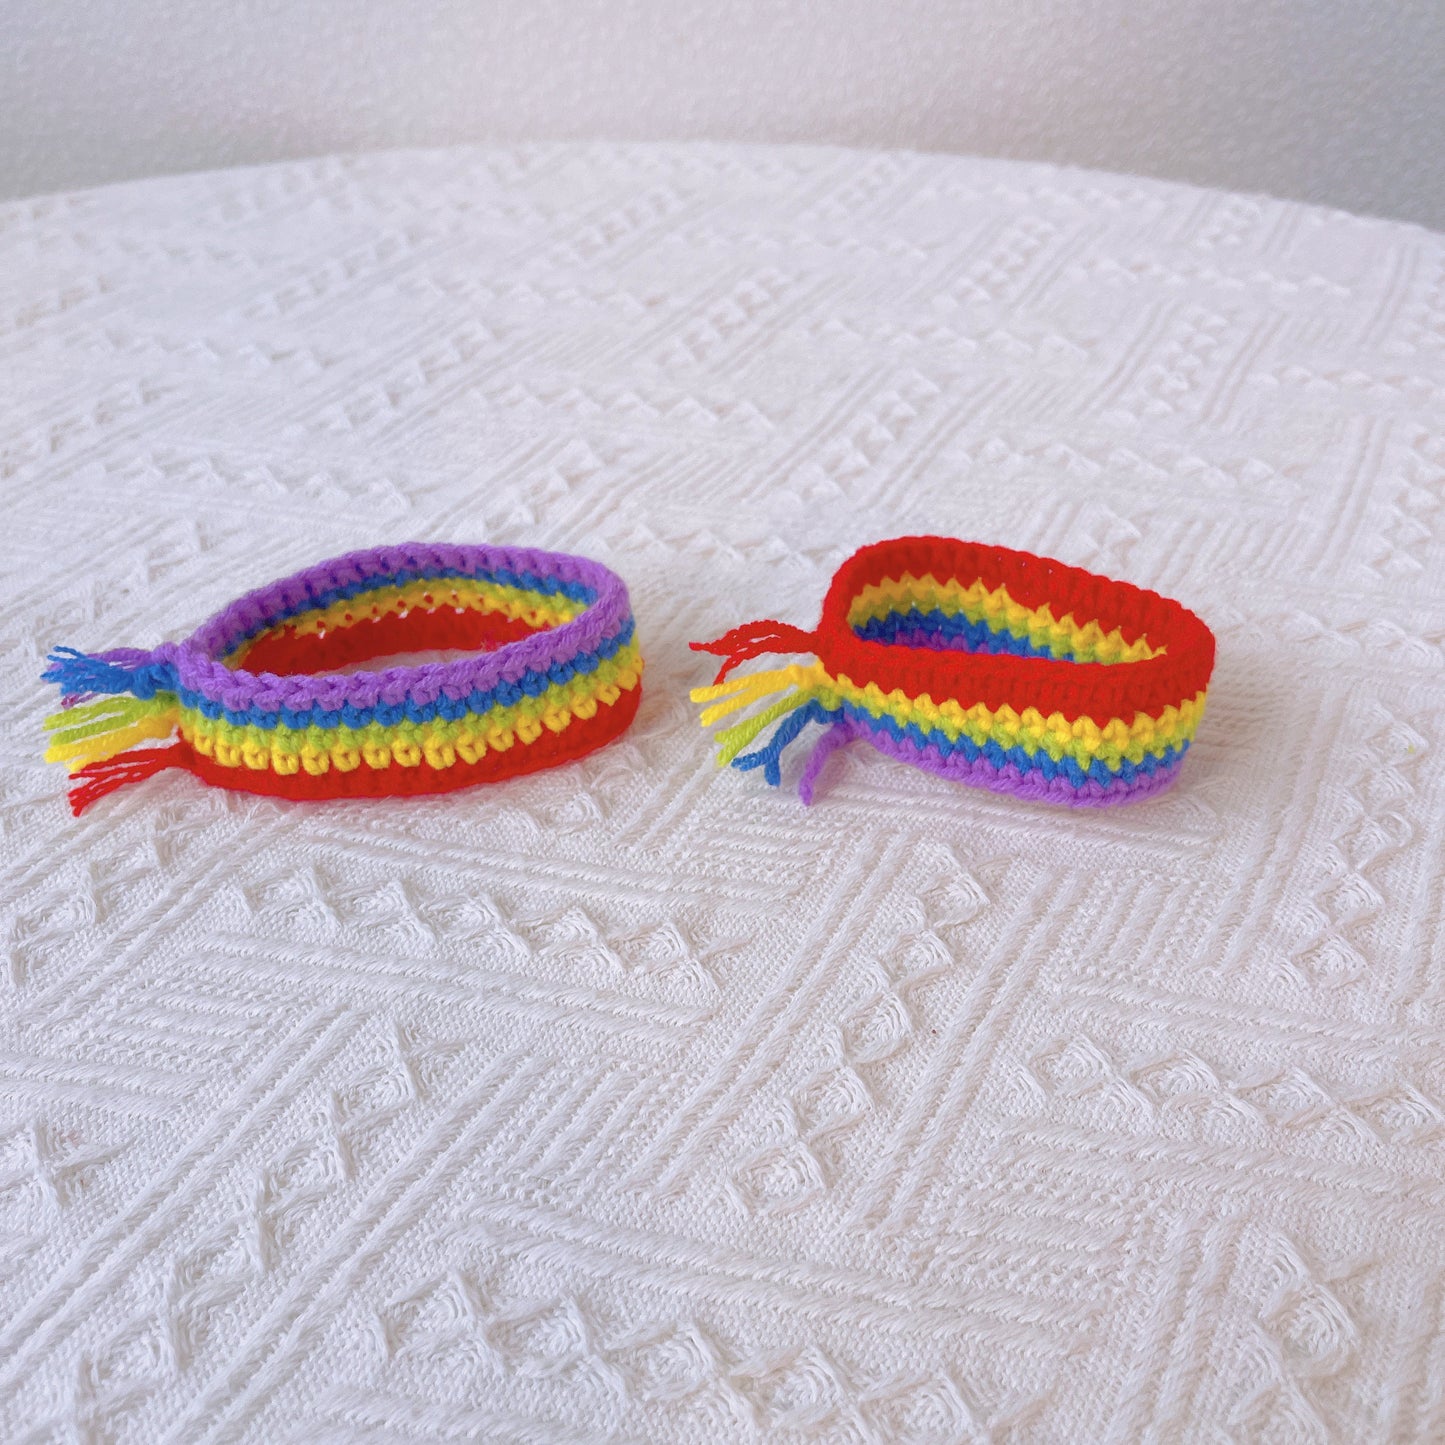 2Pcs LGBTQIA+ Rainbow Pride Crochet Handmade Wristband - Couple Bracelet, Pride Gift, Friendship Bracelet for Men and Women, LGGT Festival